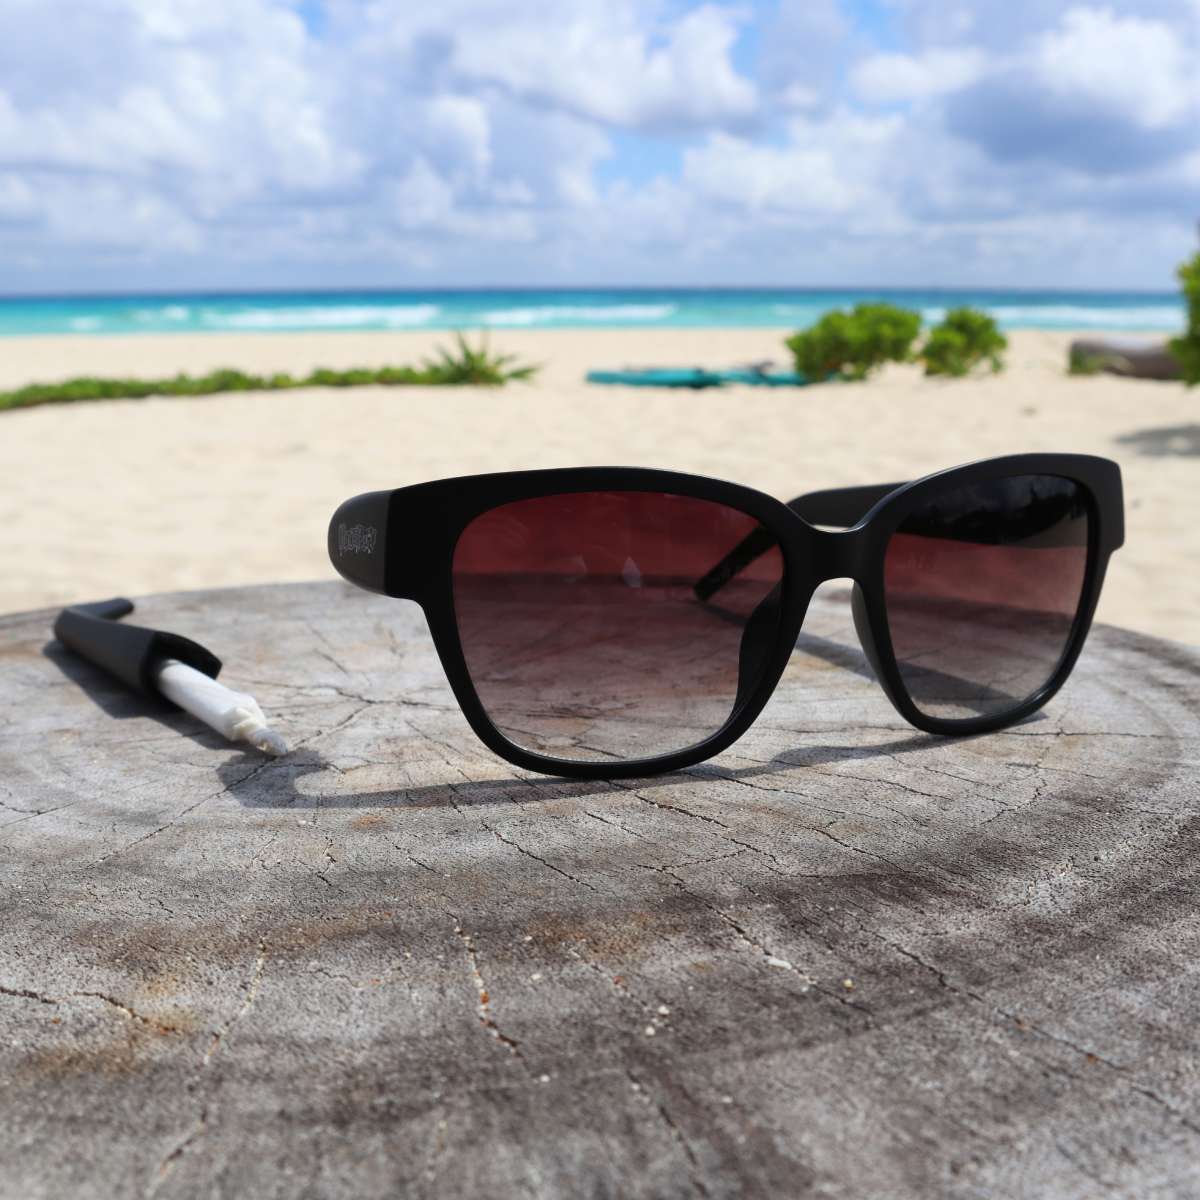 Puffora Sunglasses At Beach